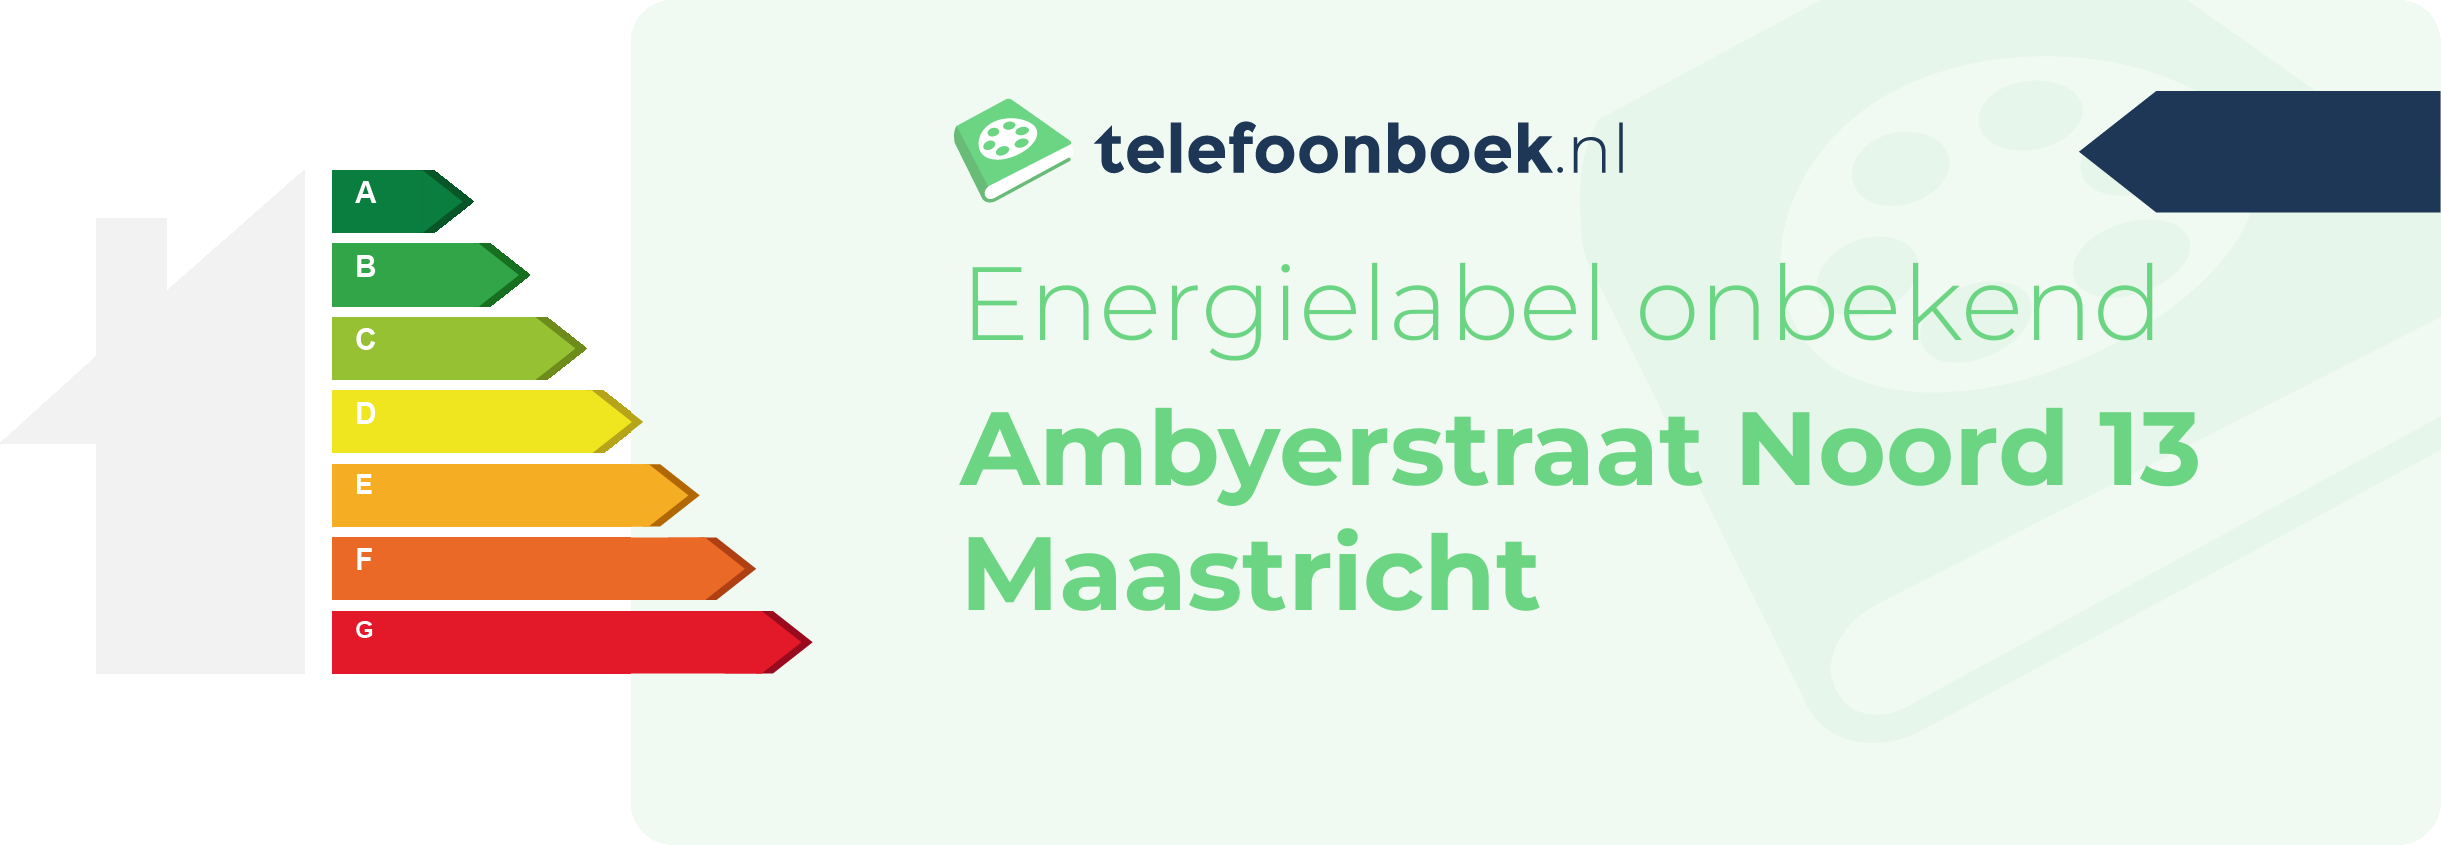 Energielabel Ambyerstraat Noord 13 Maastricht